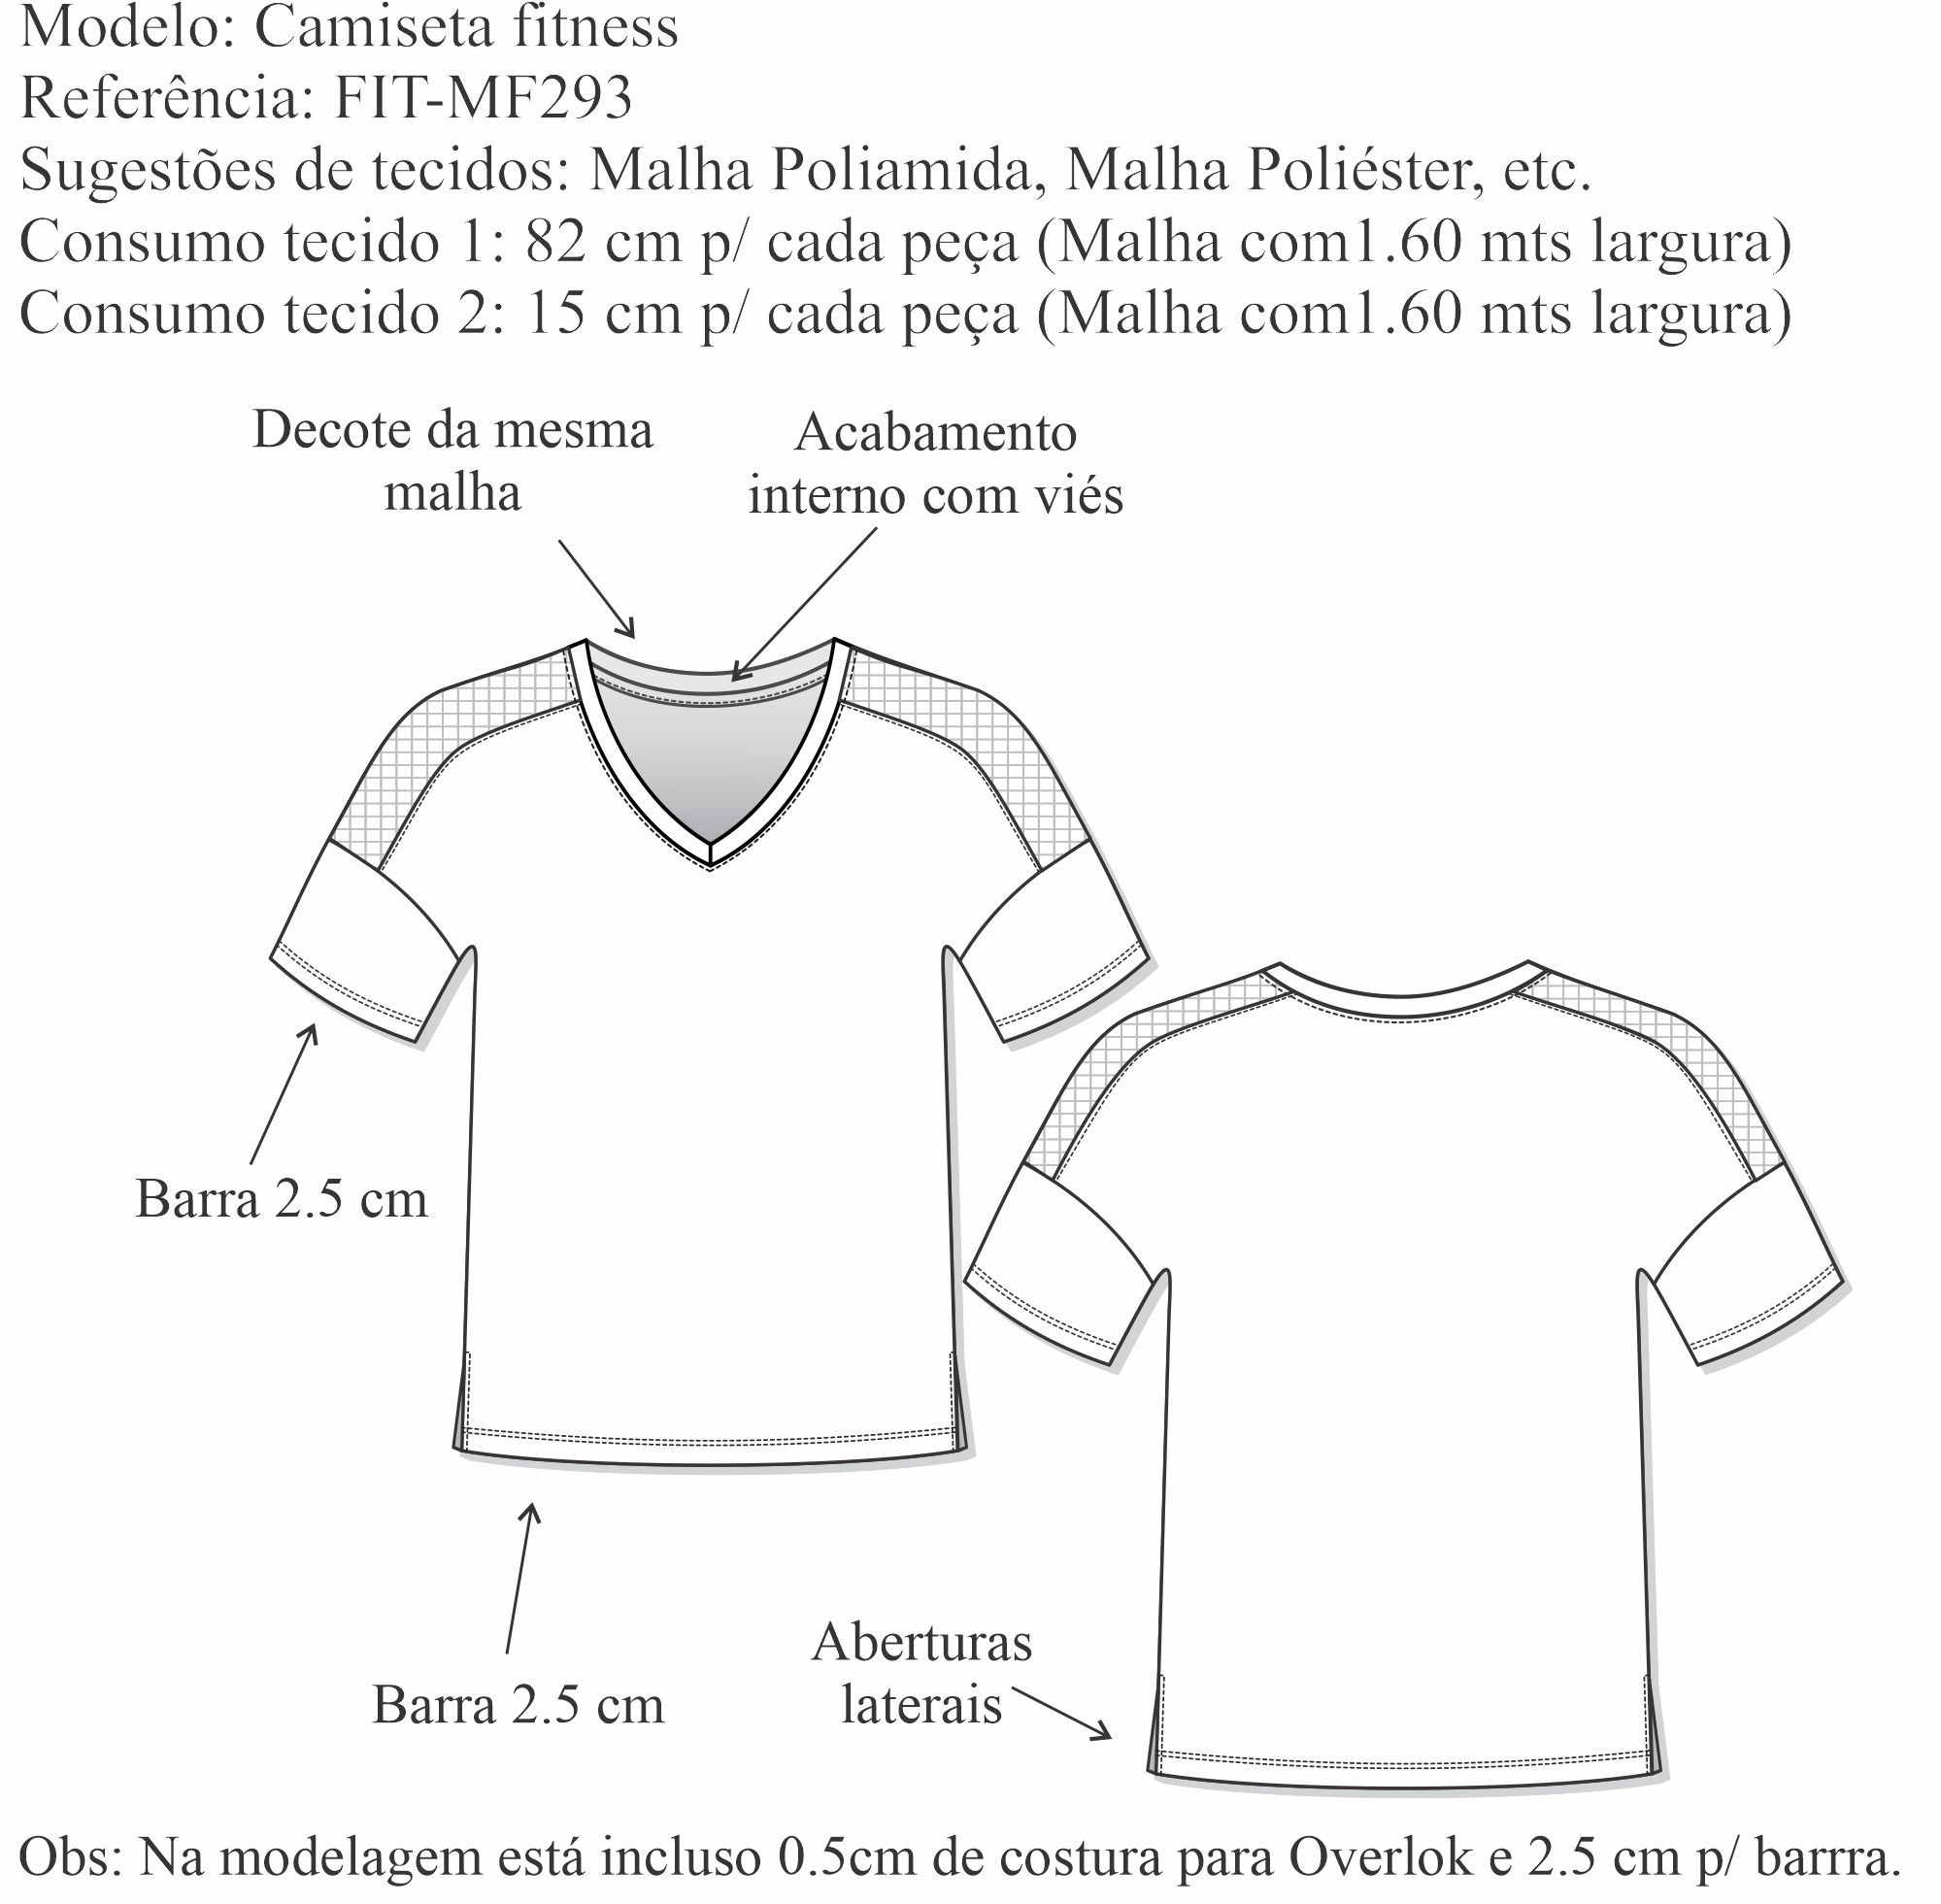 Camiseta fitness (FIT-MF293) - Foto 1